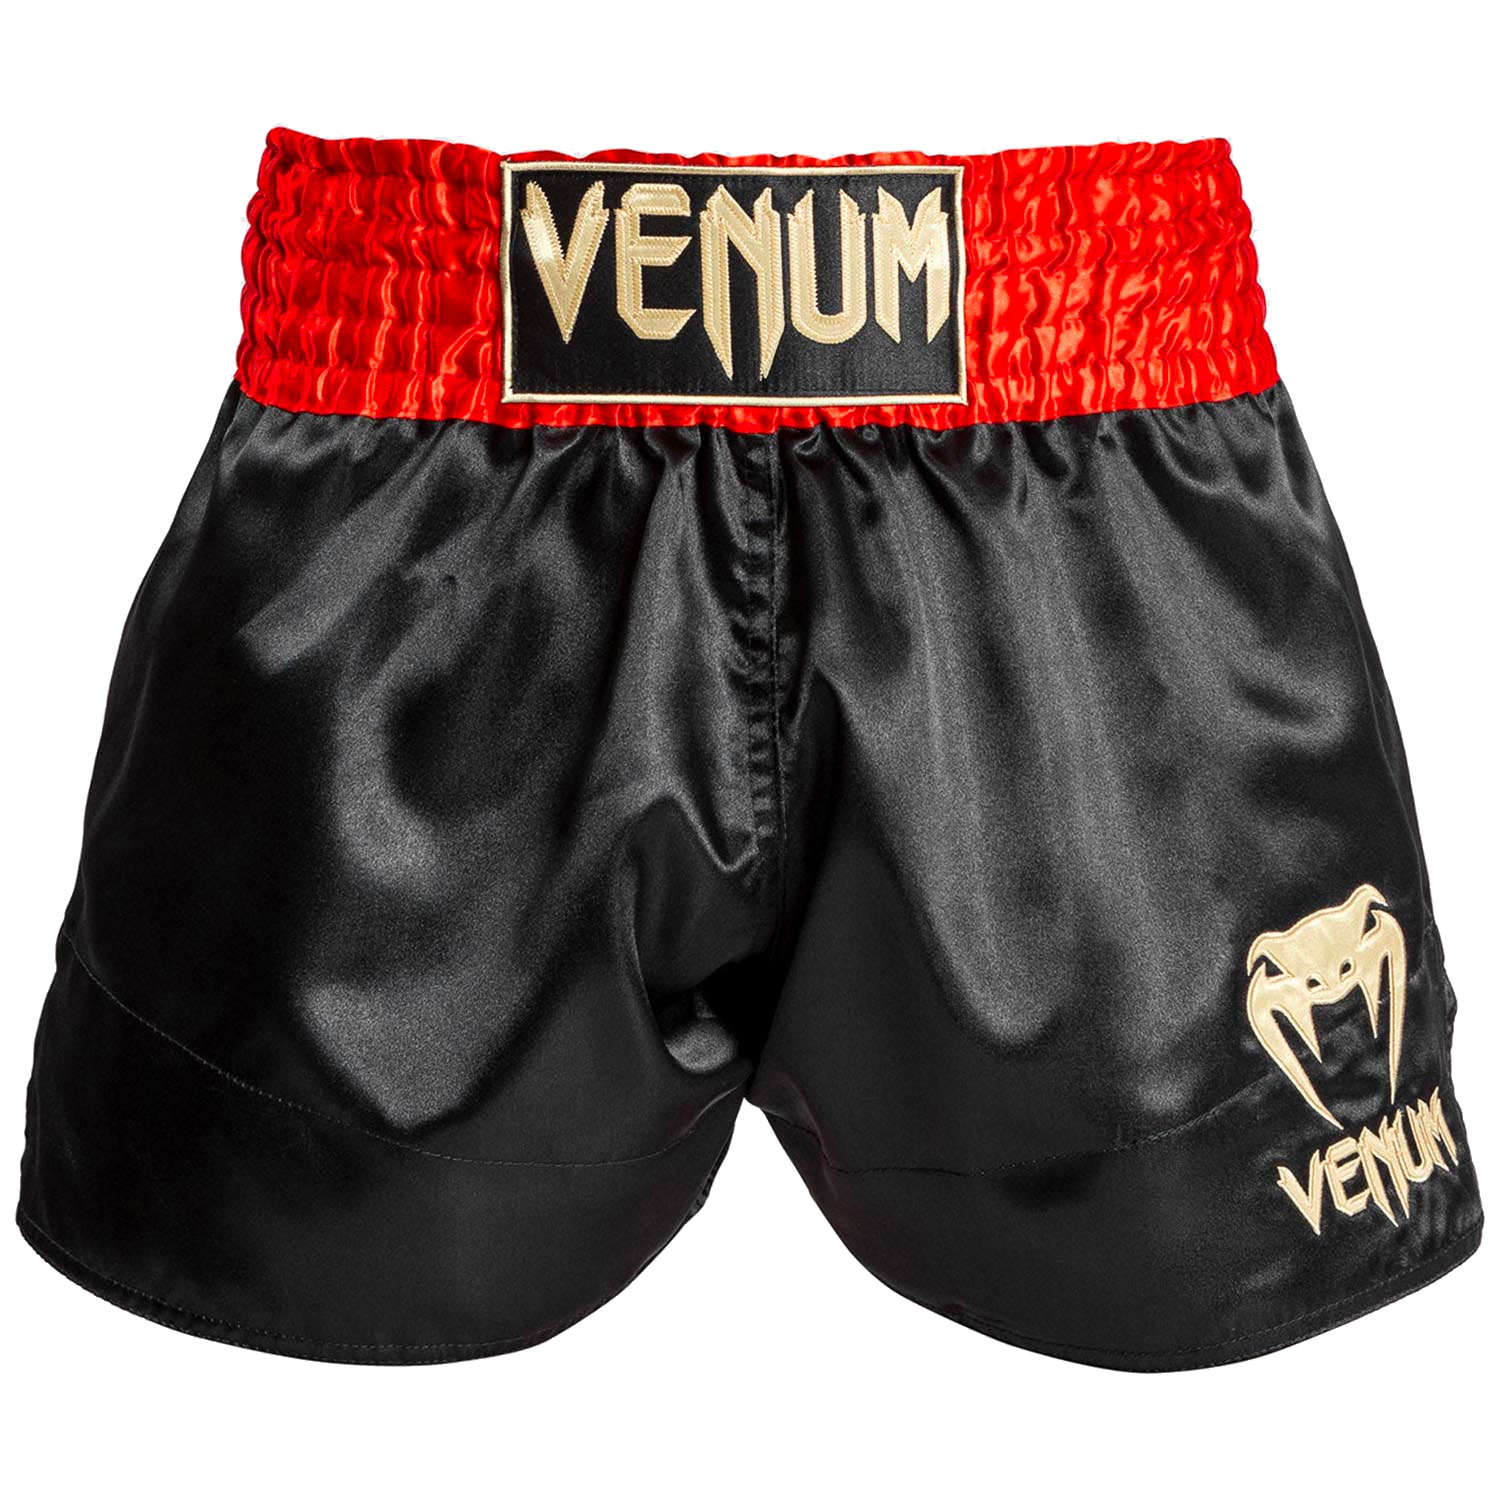 VENUM Muay Thai Shorts, Classic, red-black-gold